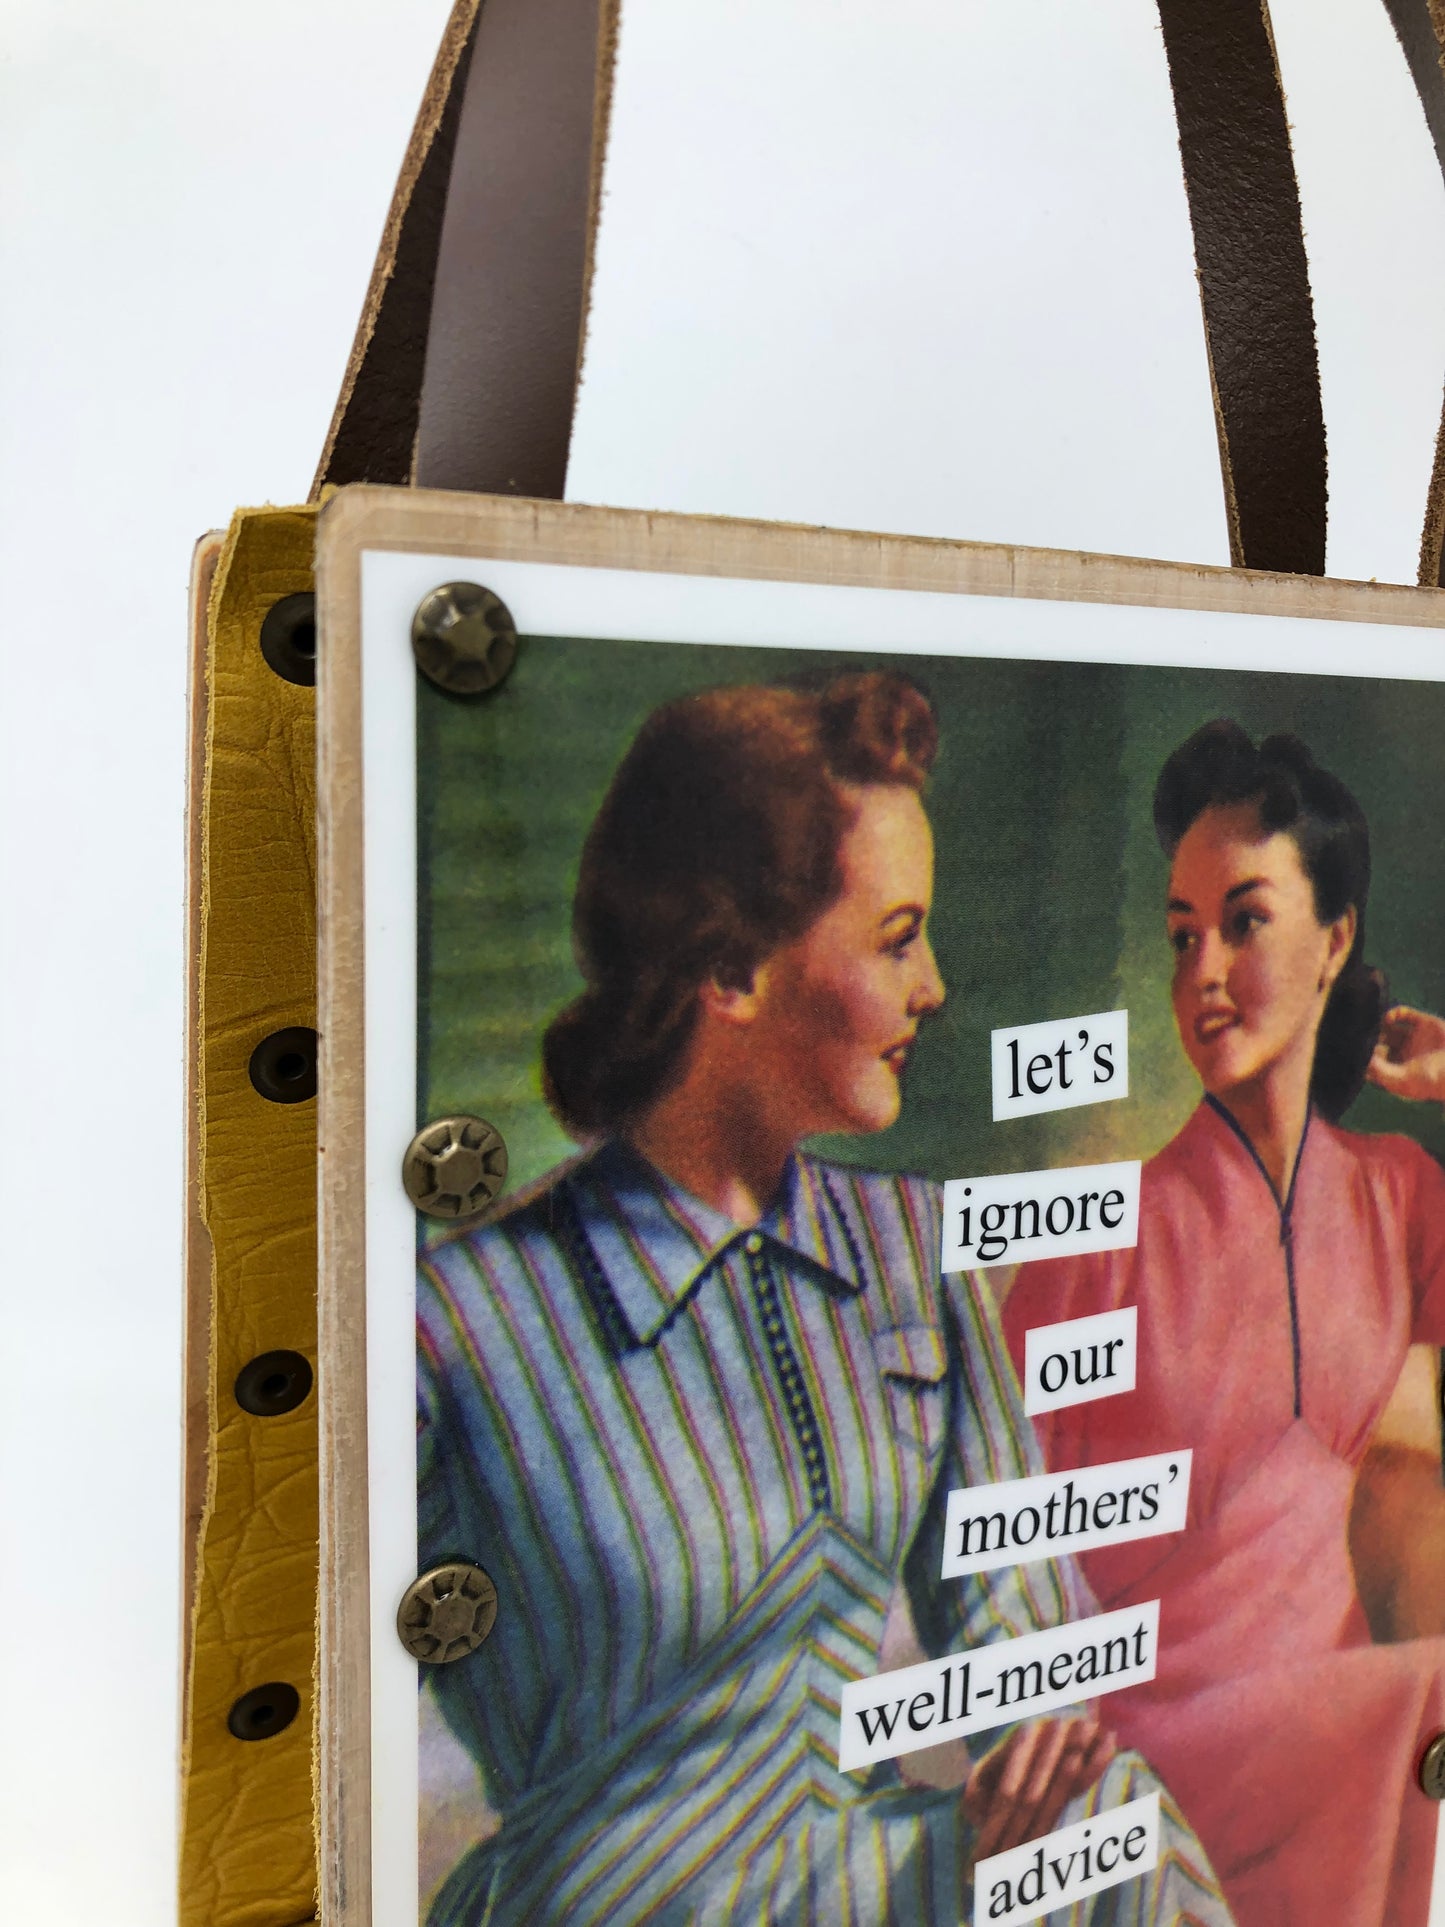 Vintage Modern Woman Handbag-Looking for Trouble?